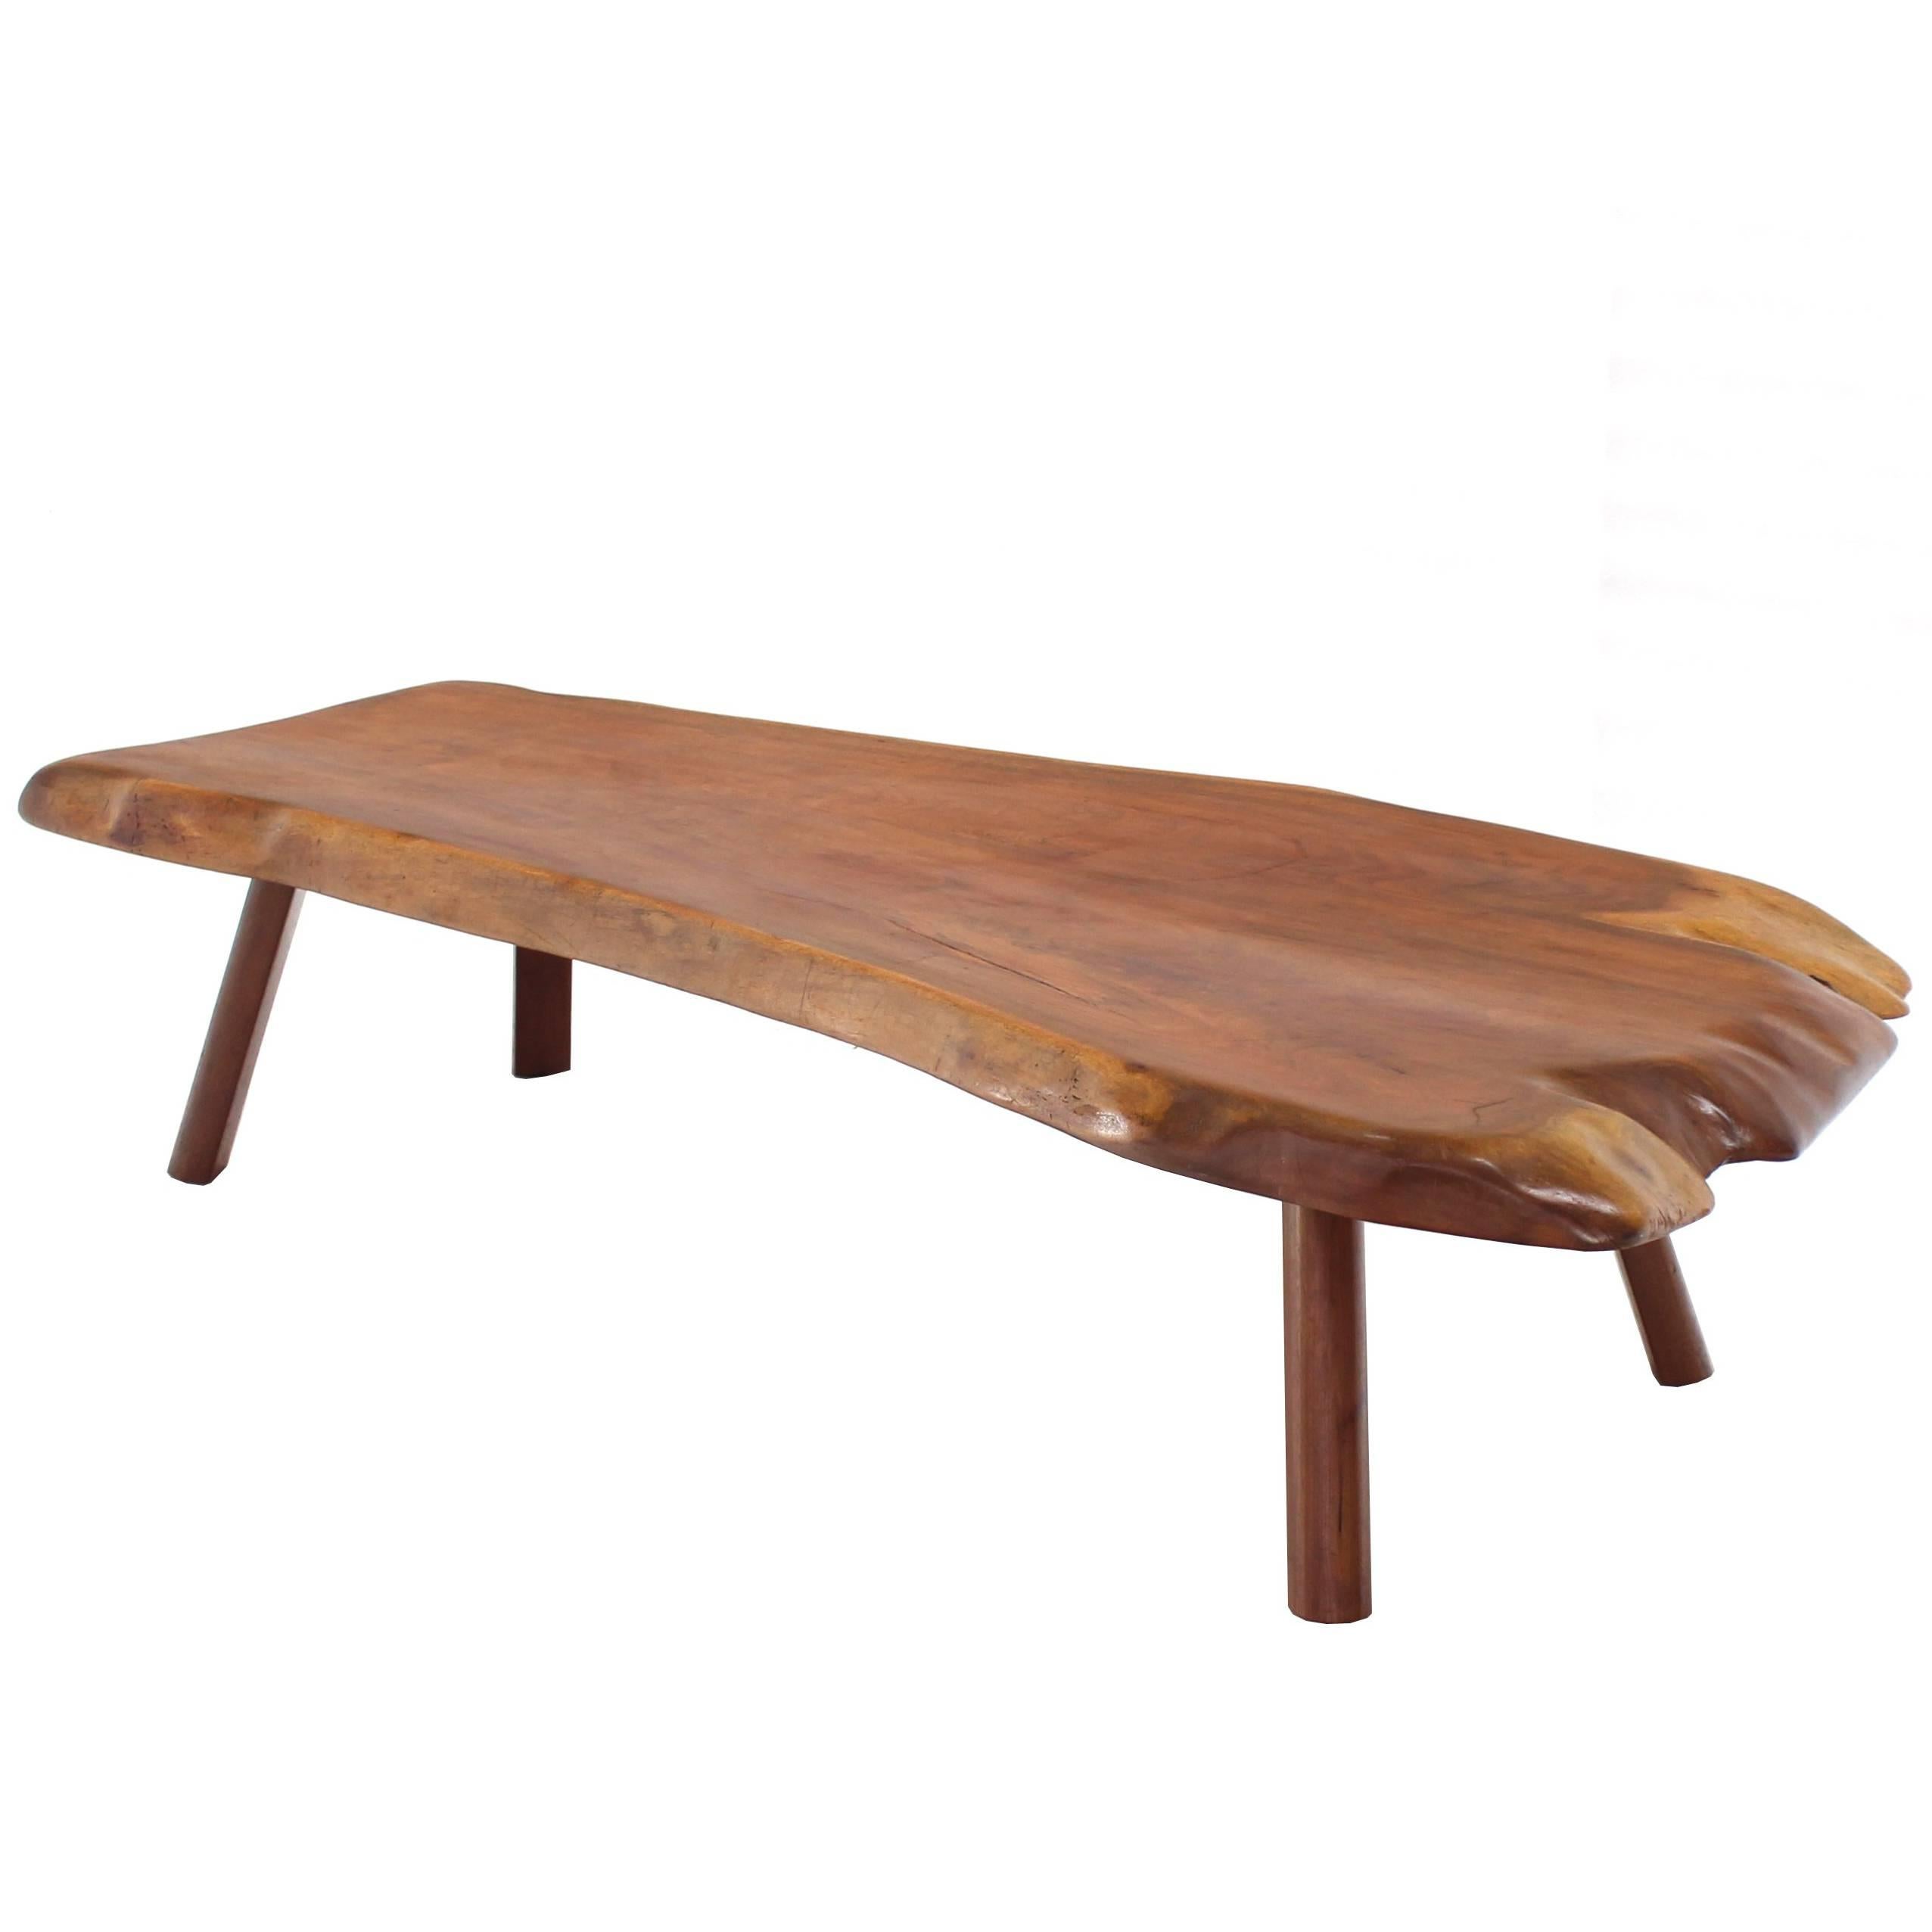 Large Heavy Slab Wood Top Coffee Table